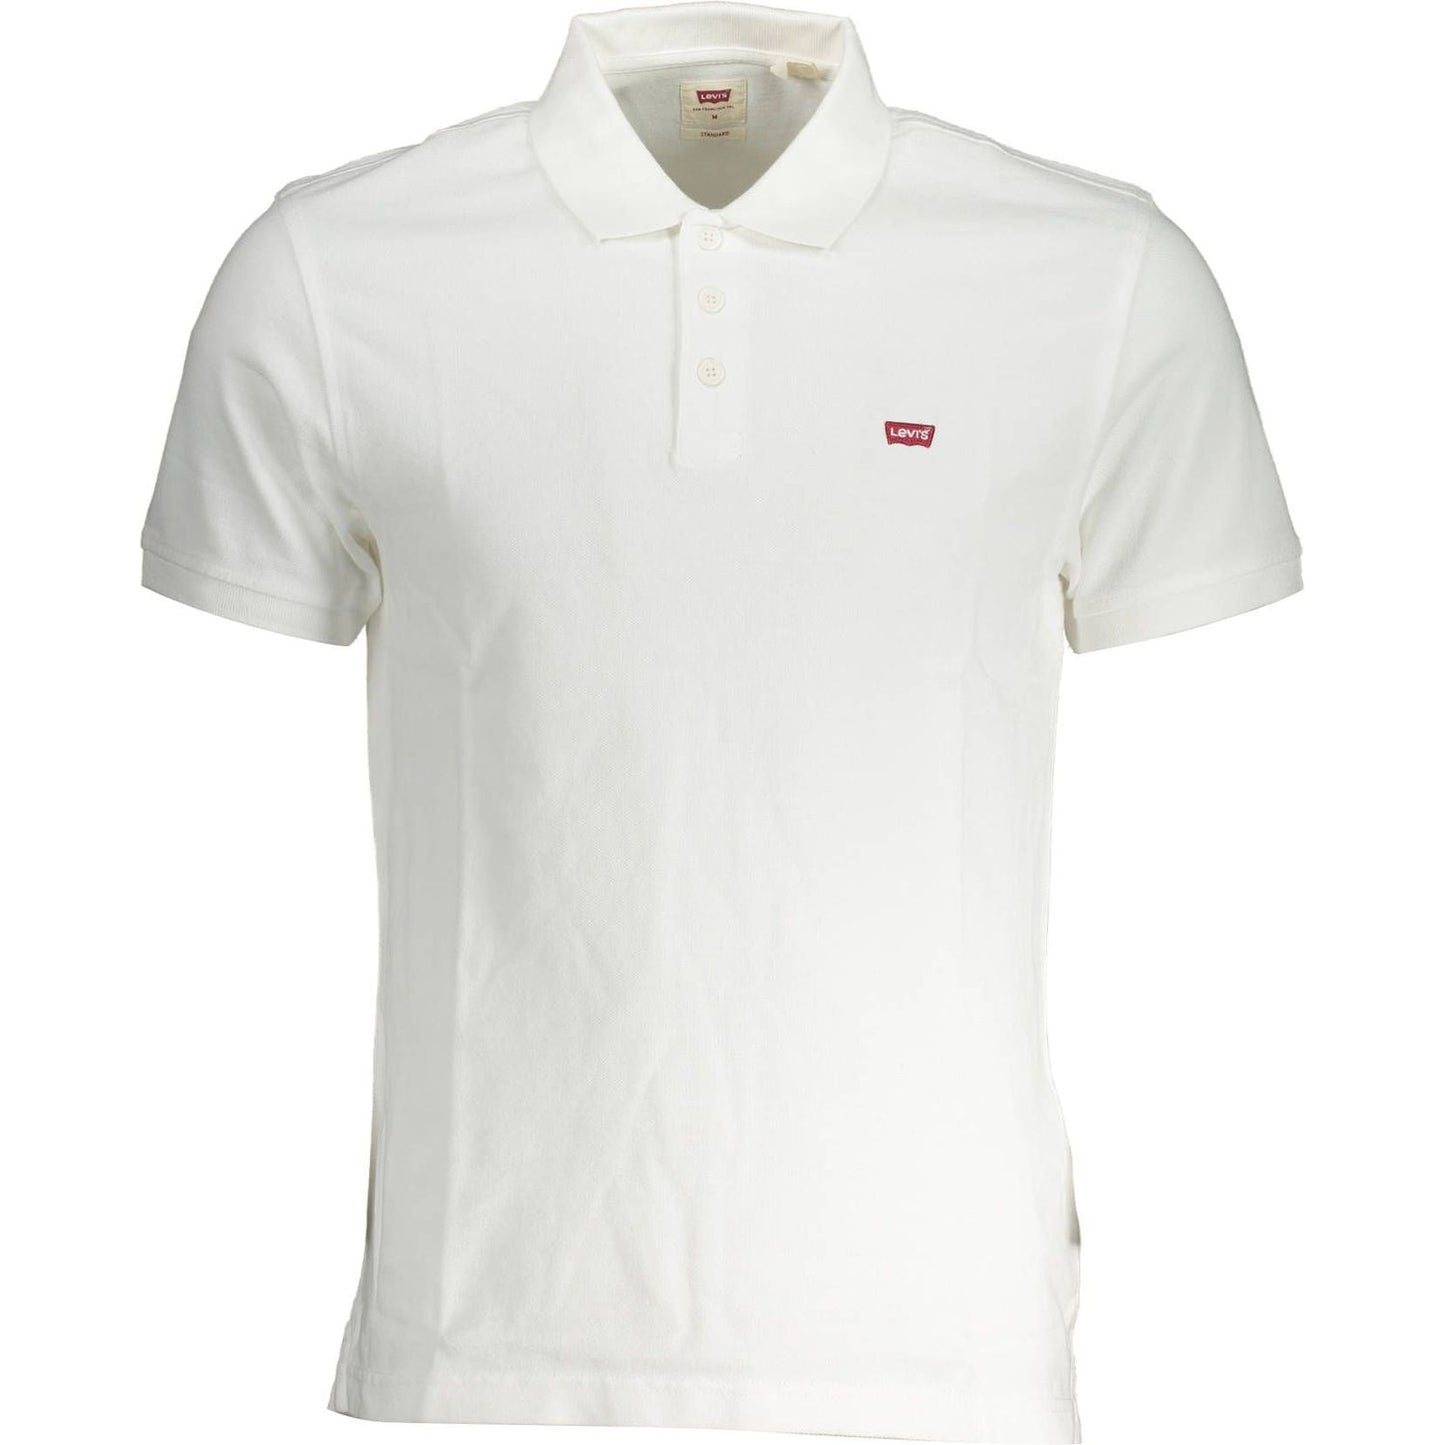 Levi's Classic White Cotton Polo Shirt classic-white-cotton-polo-shirt